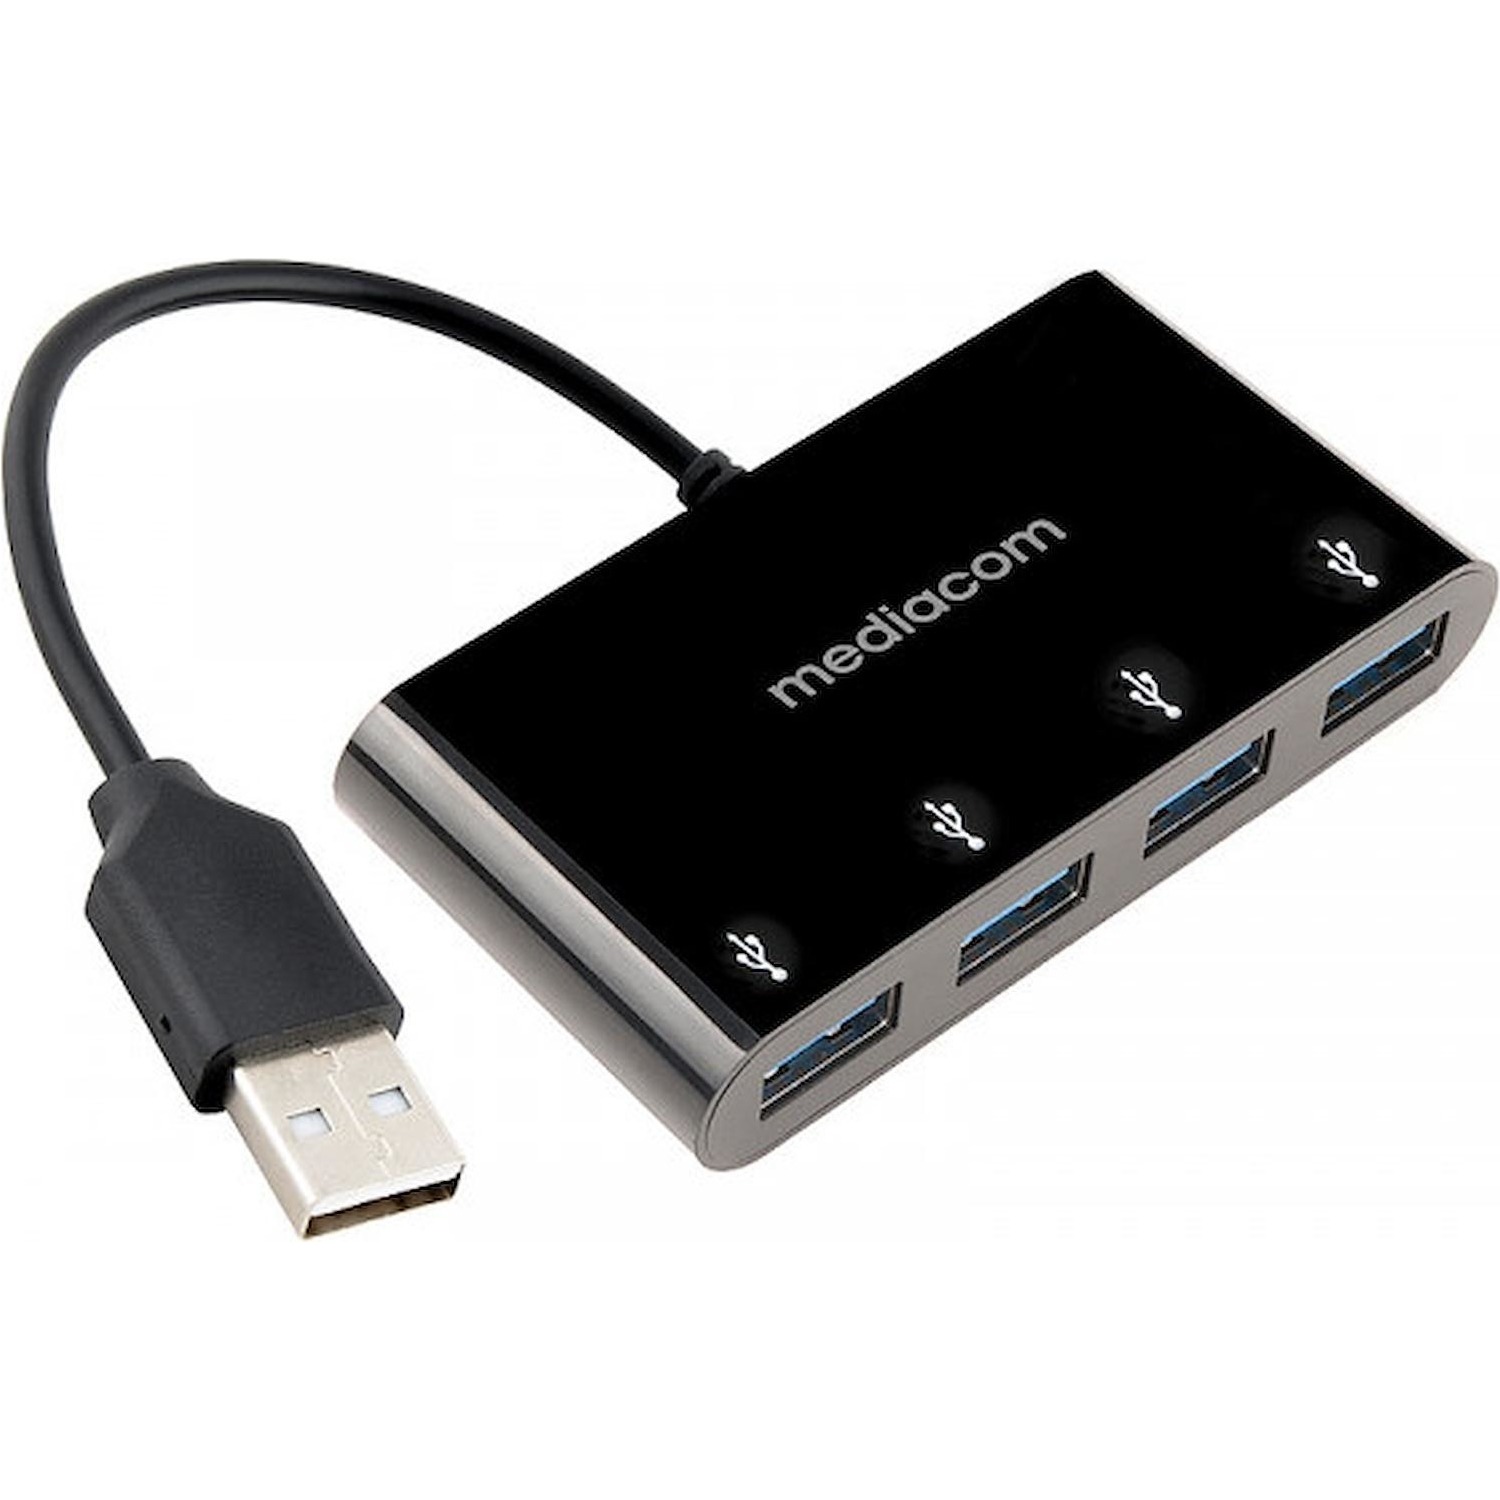 Immagine per Hub Mediacom USB 3.0 4 Porte da DIMOStore